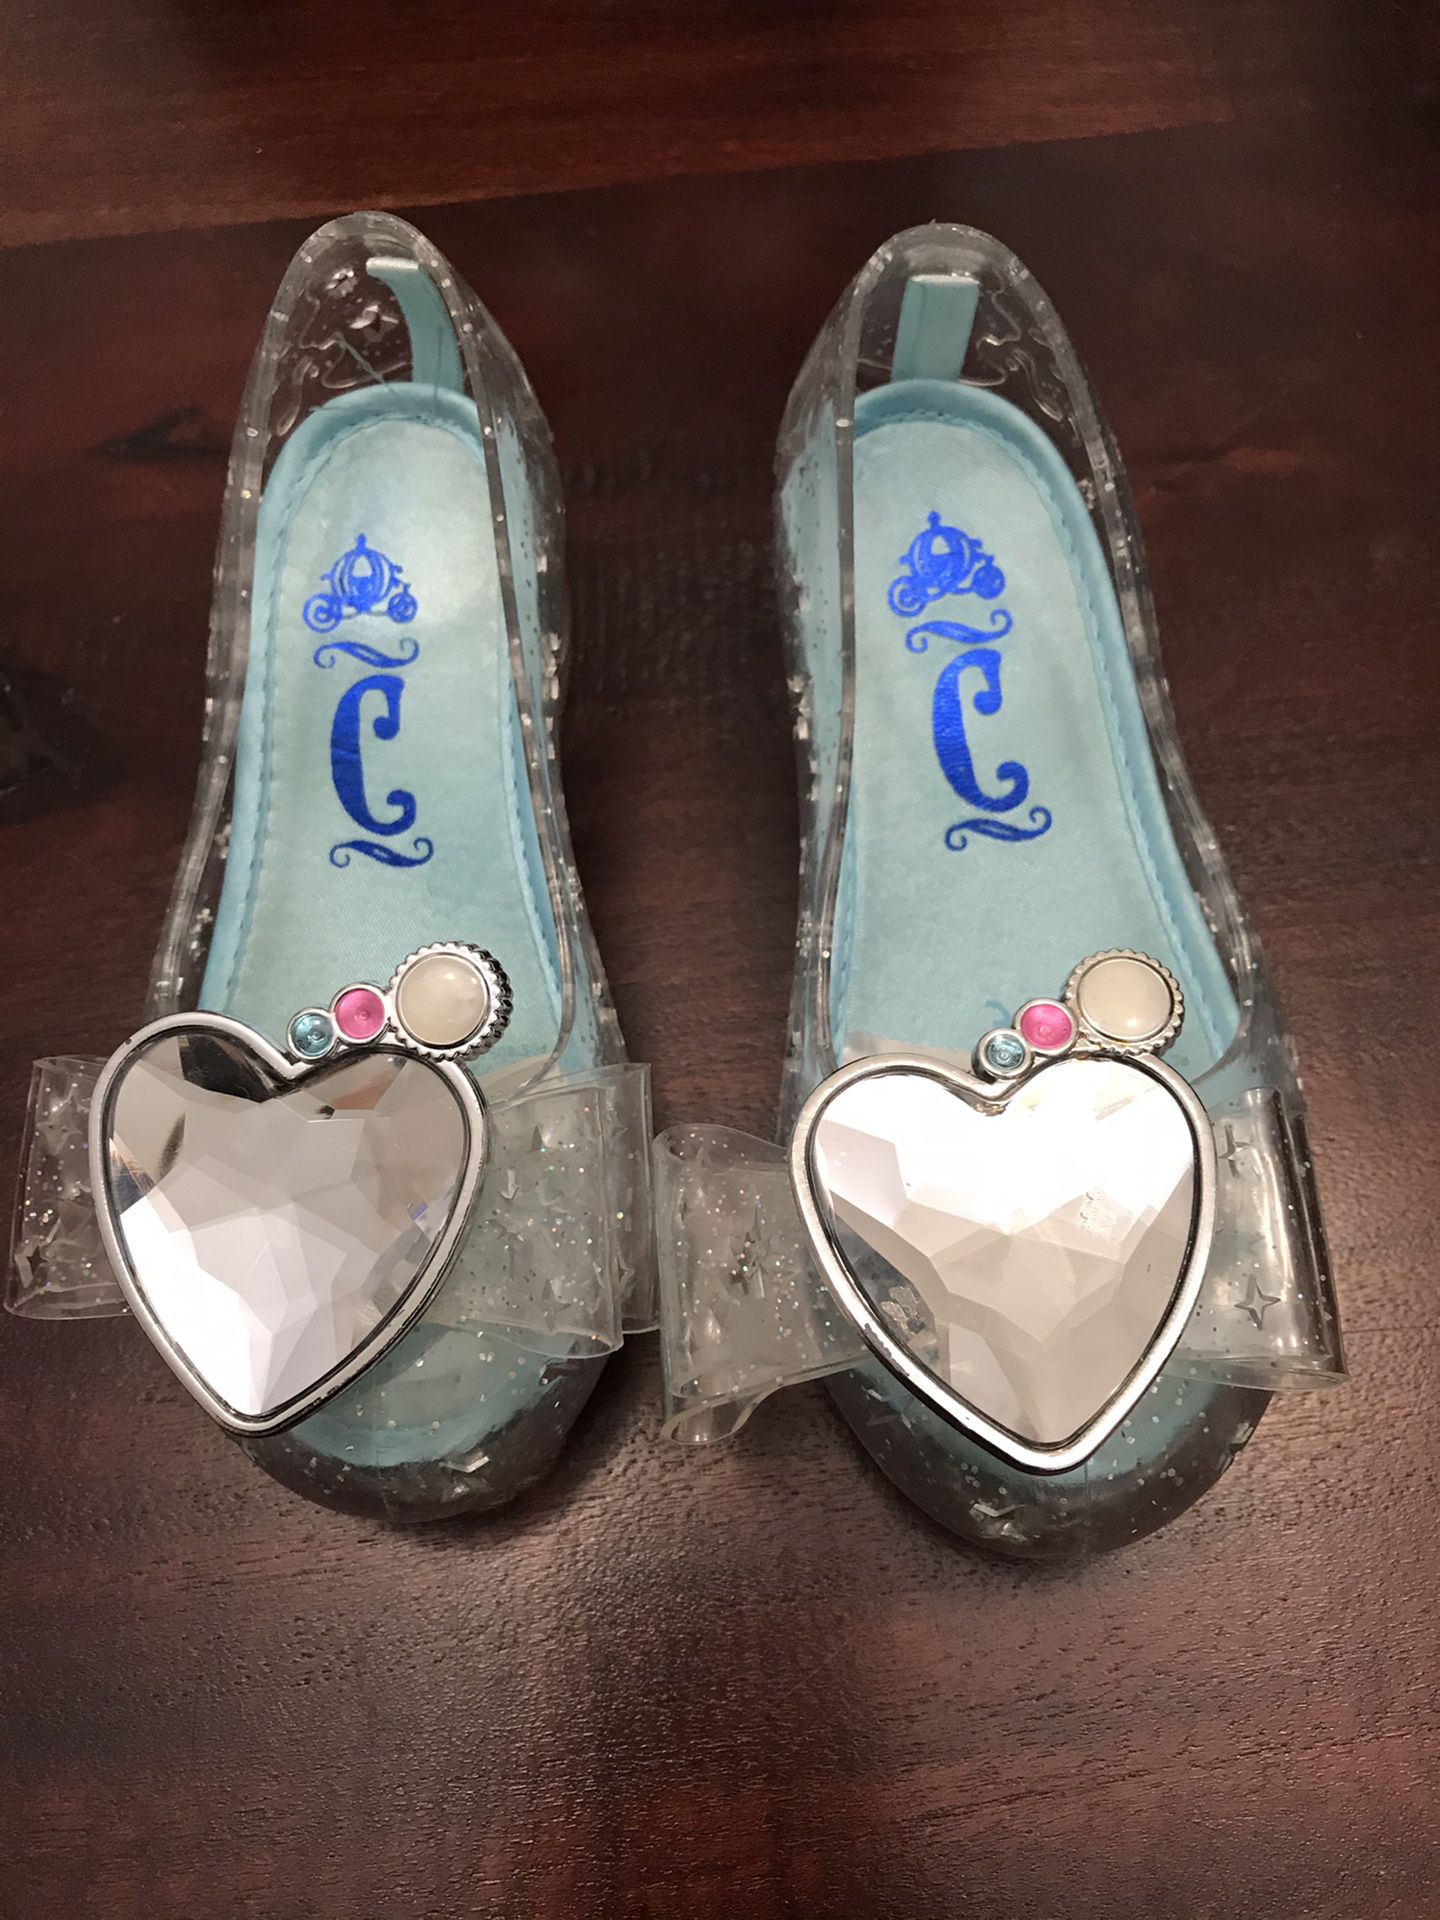 Cinderella light up Disney princess shoes size 7/8